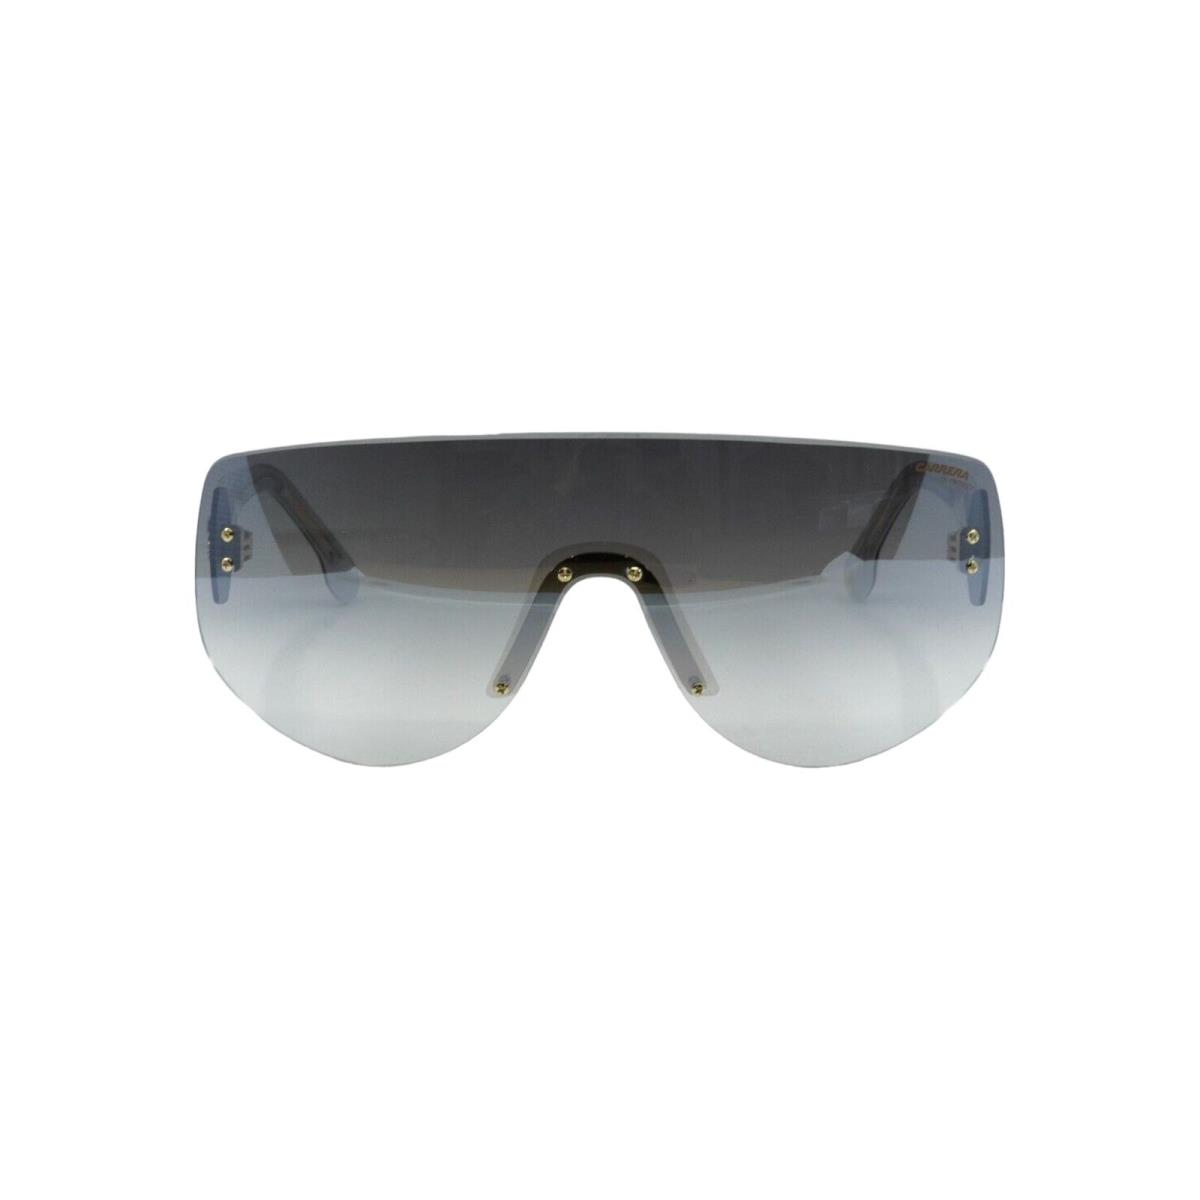 Carrera Flaglab 12 Black/silver 99-01-140 Sunglasses